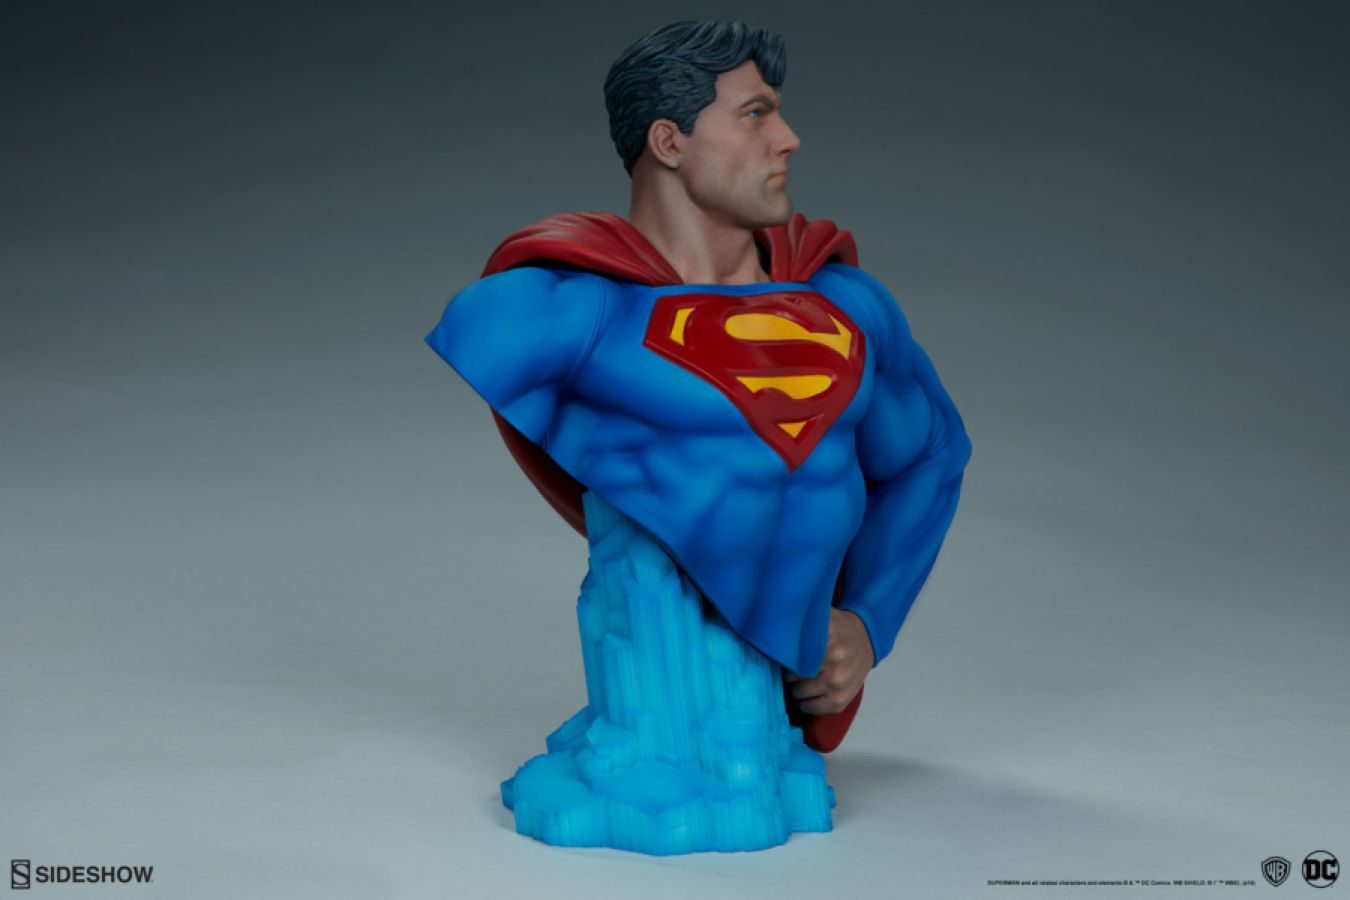 Superman - Superman Bust - Ozzie Collectables